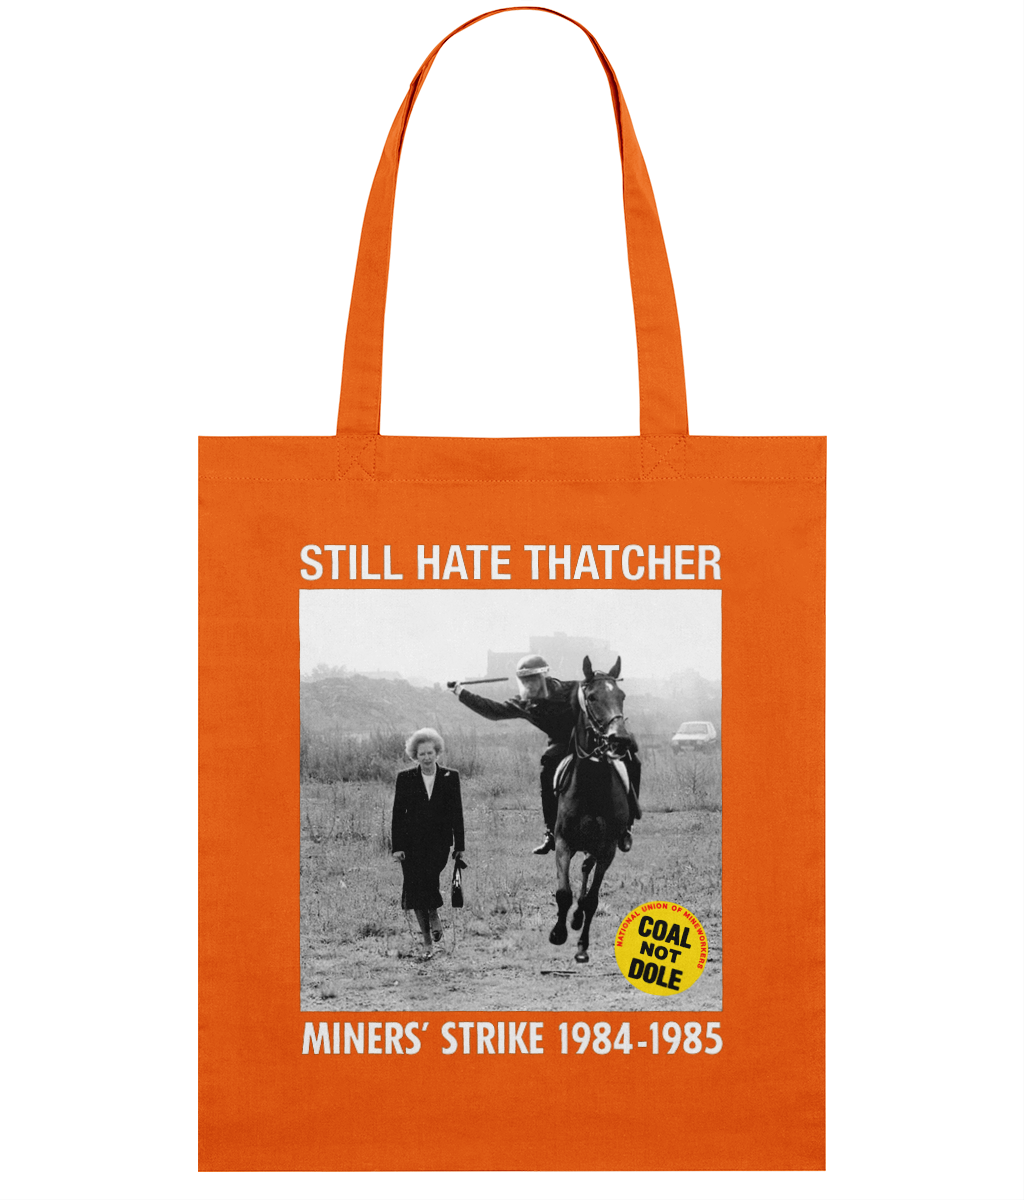 STILL HATE THATCHER - Miners' Strike 1984-1985 - Tote Bag